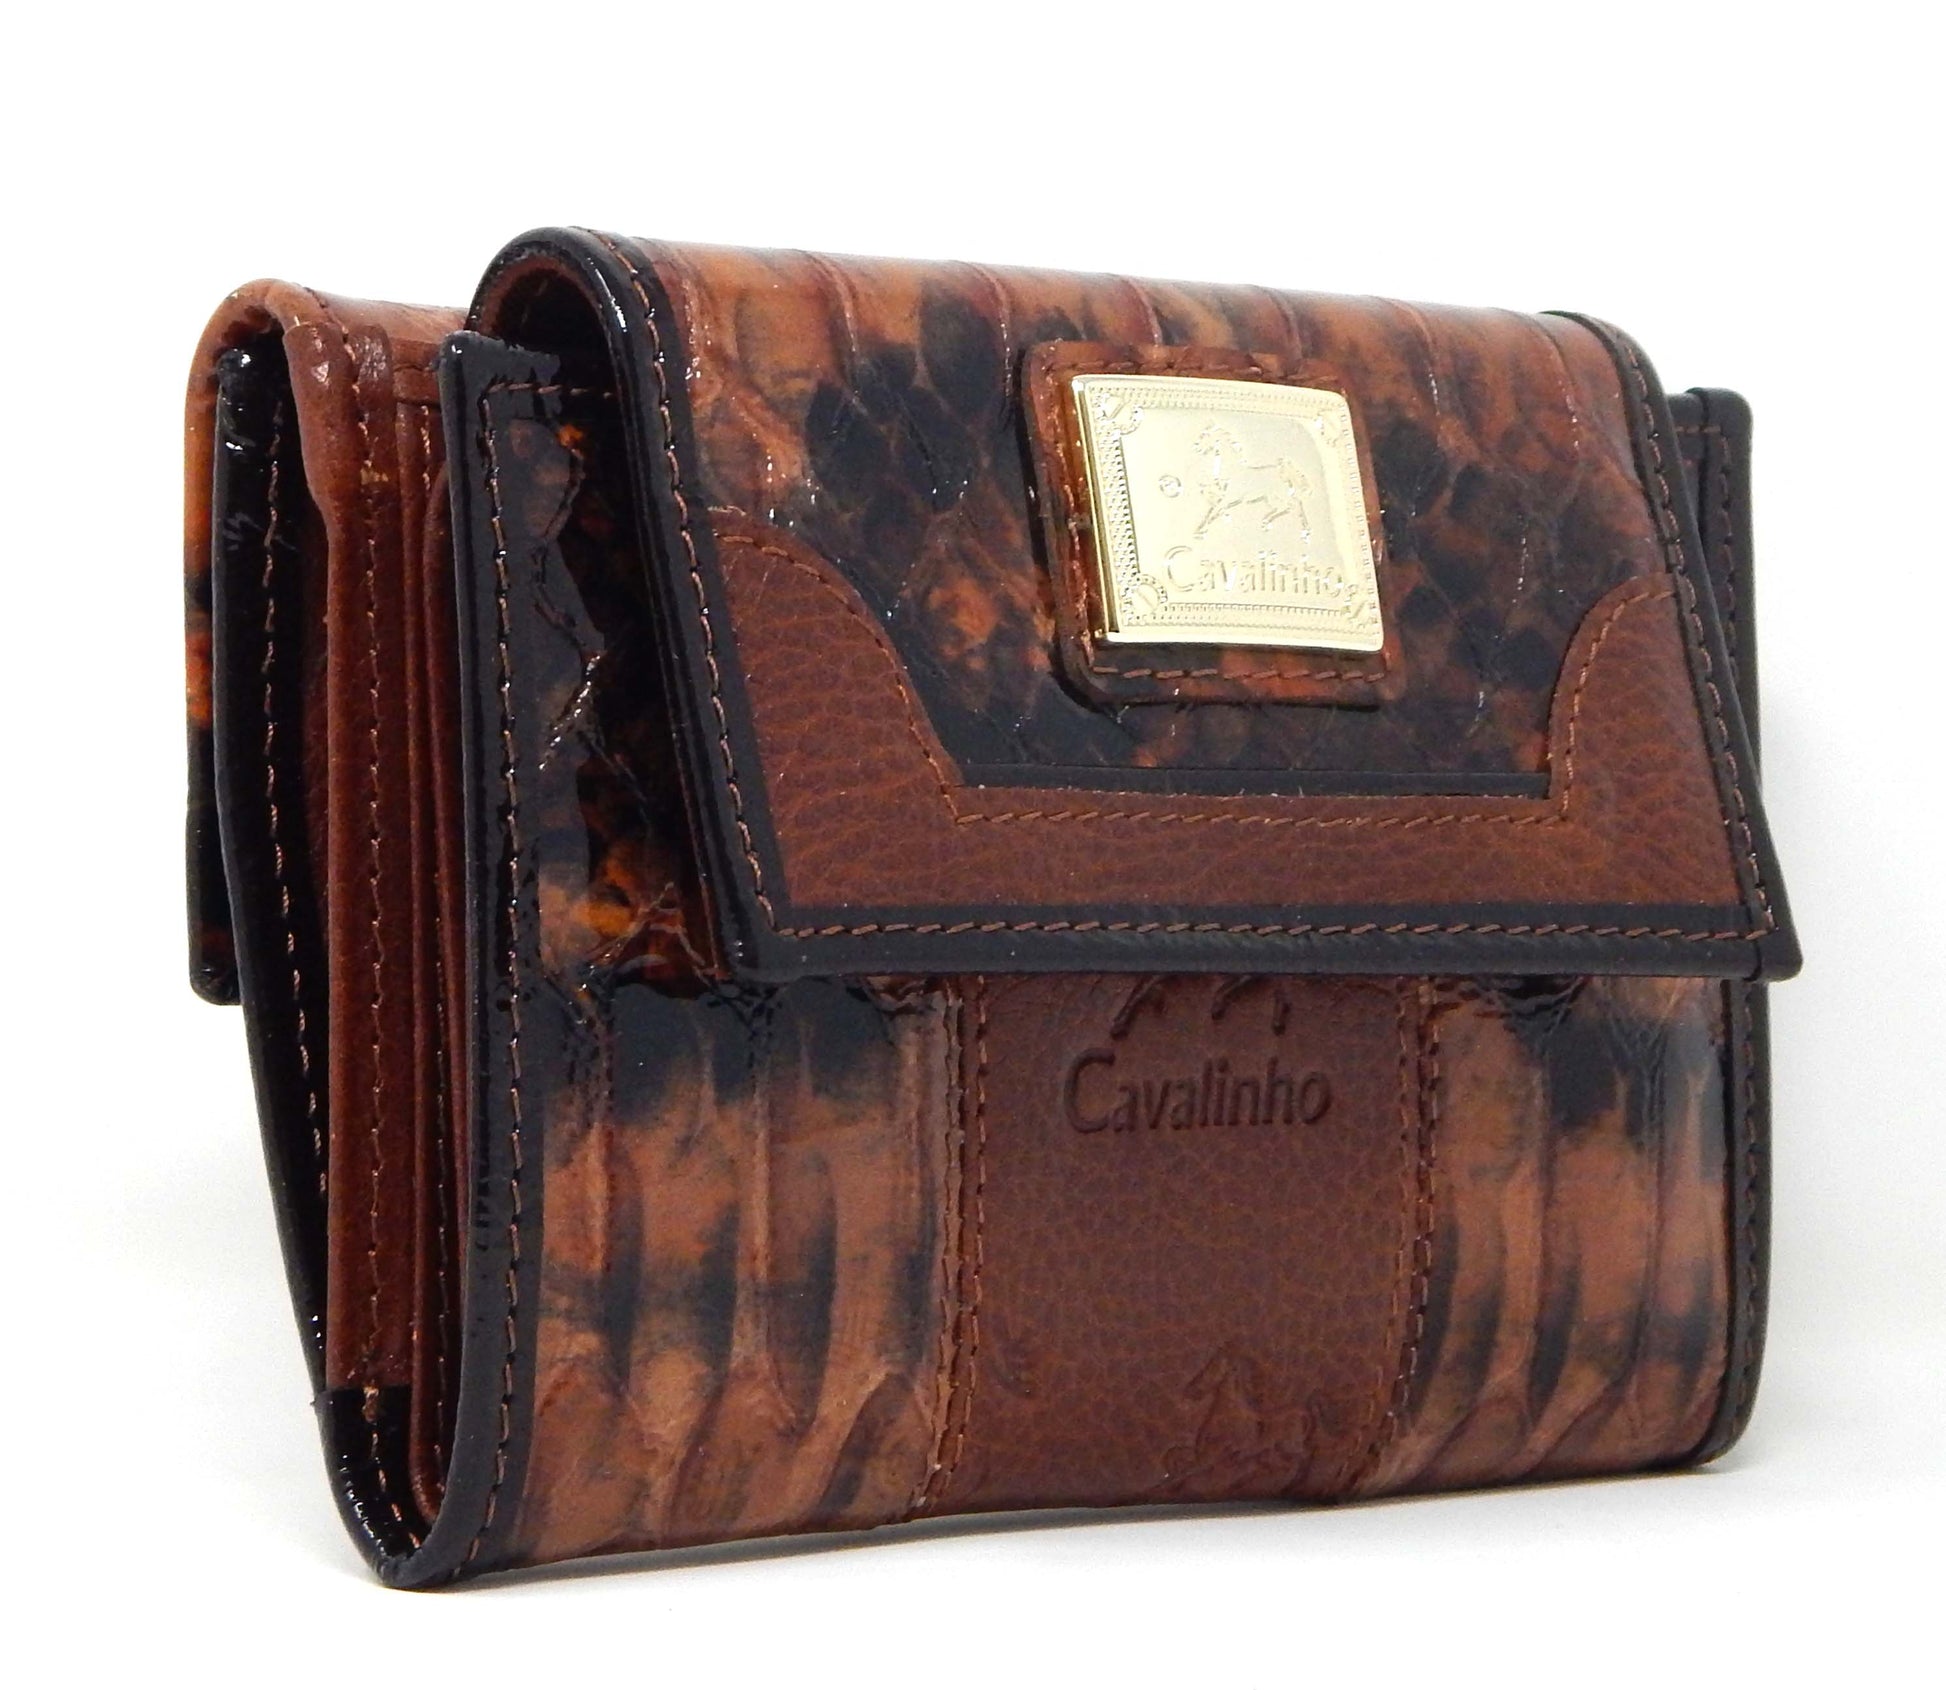 Cavalinho Honor Leather Wallet - SaddleBrown - 28190219.13.99_2